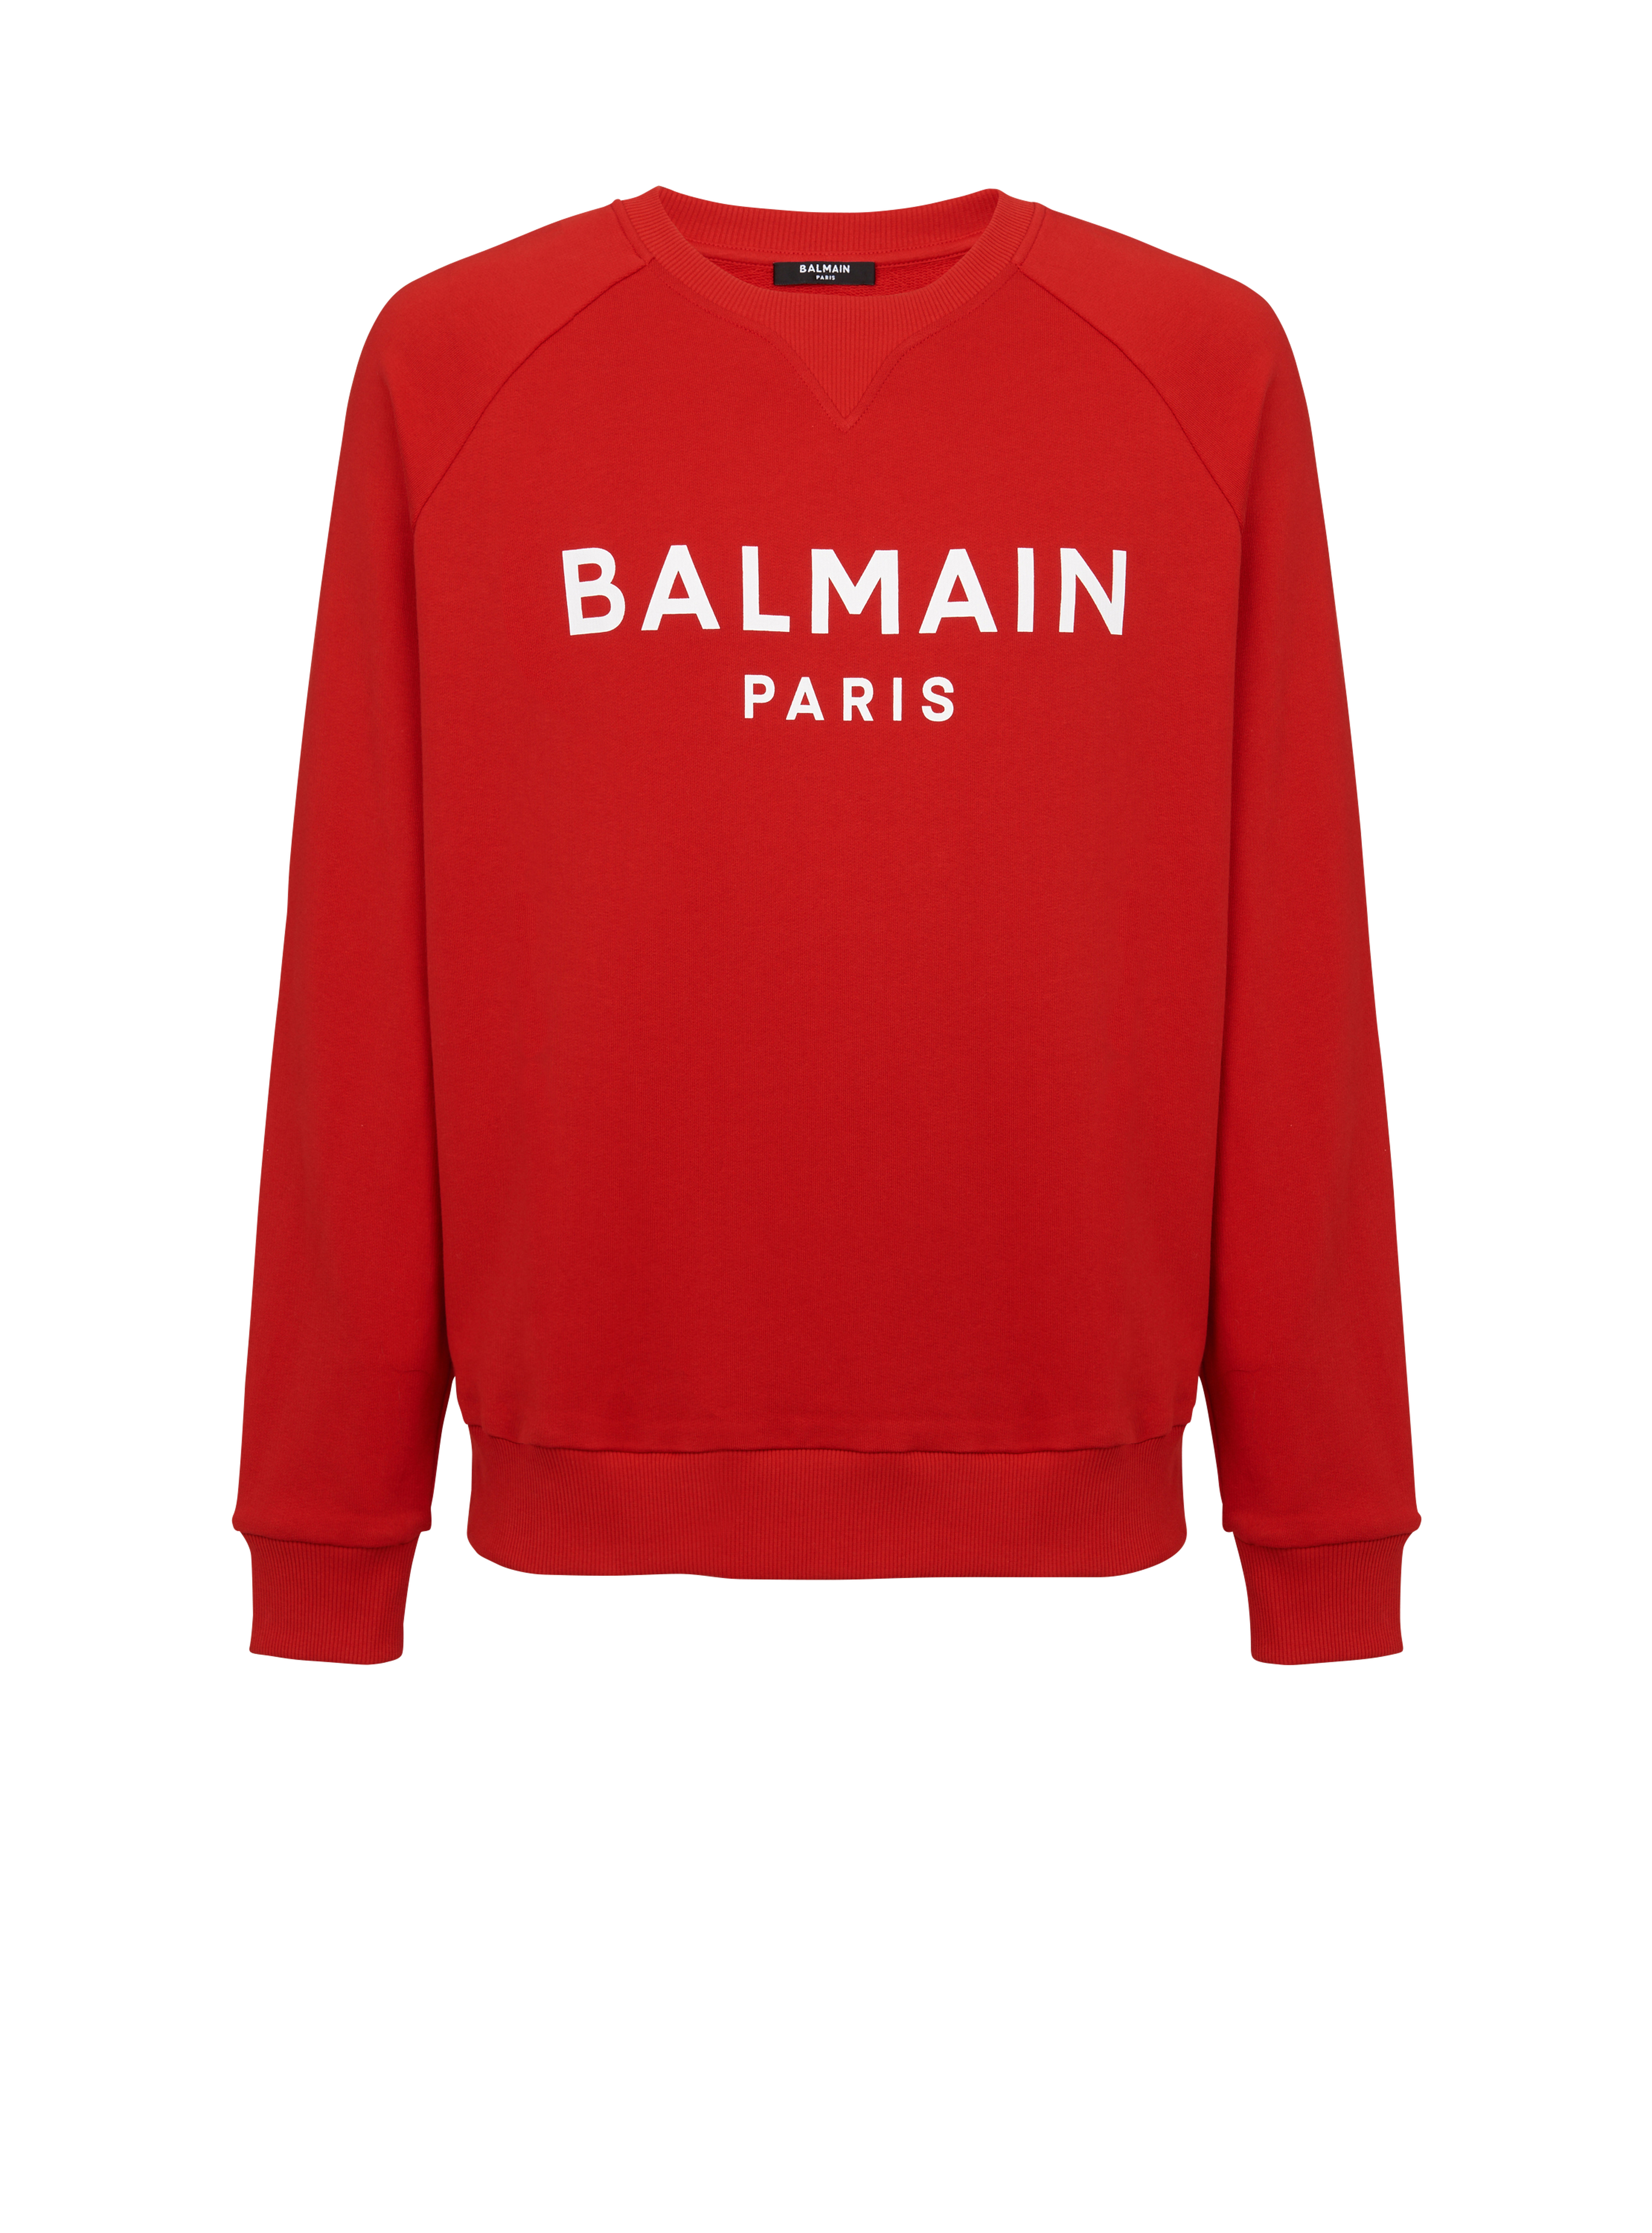 Felpa in cotone con logo Balmain Paris floccato, rosso